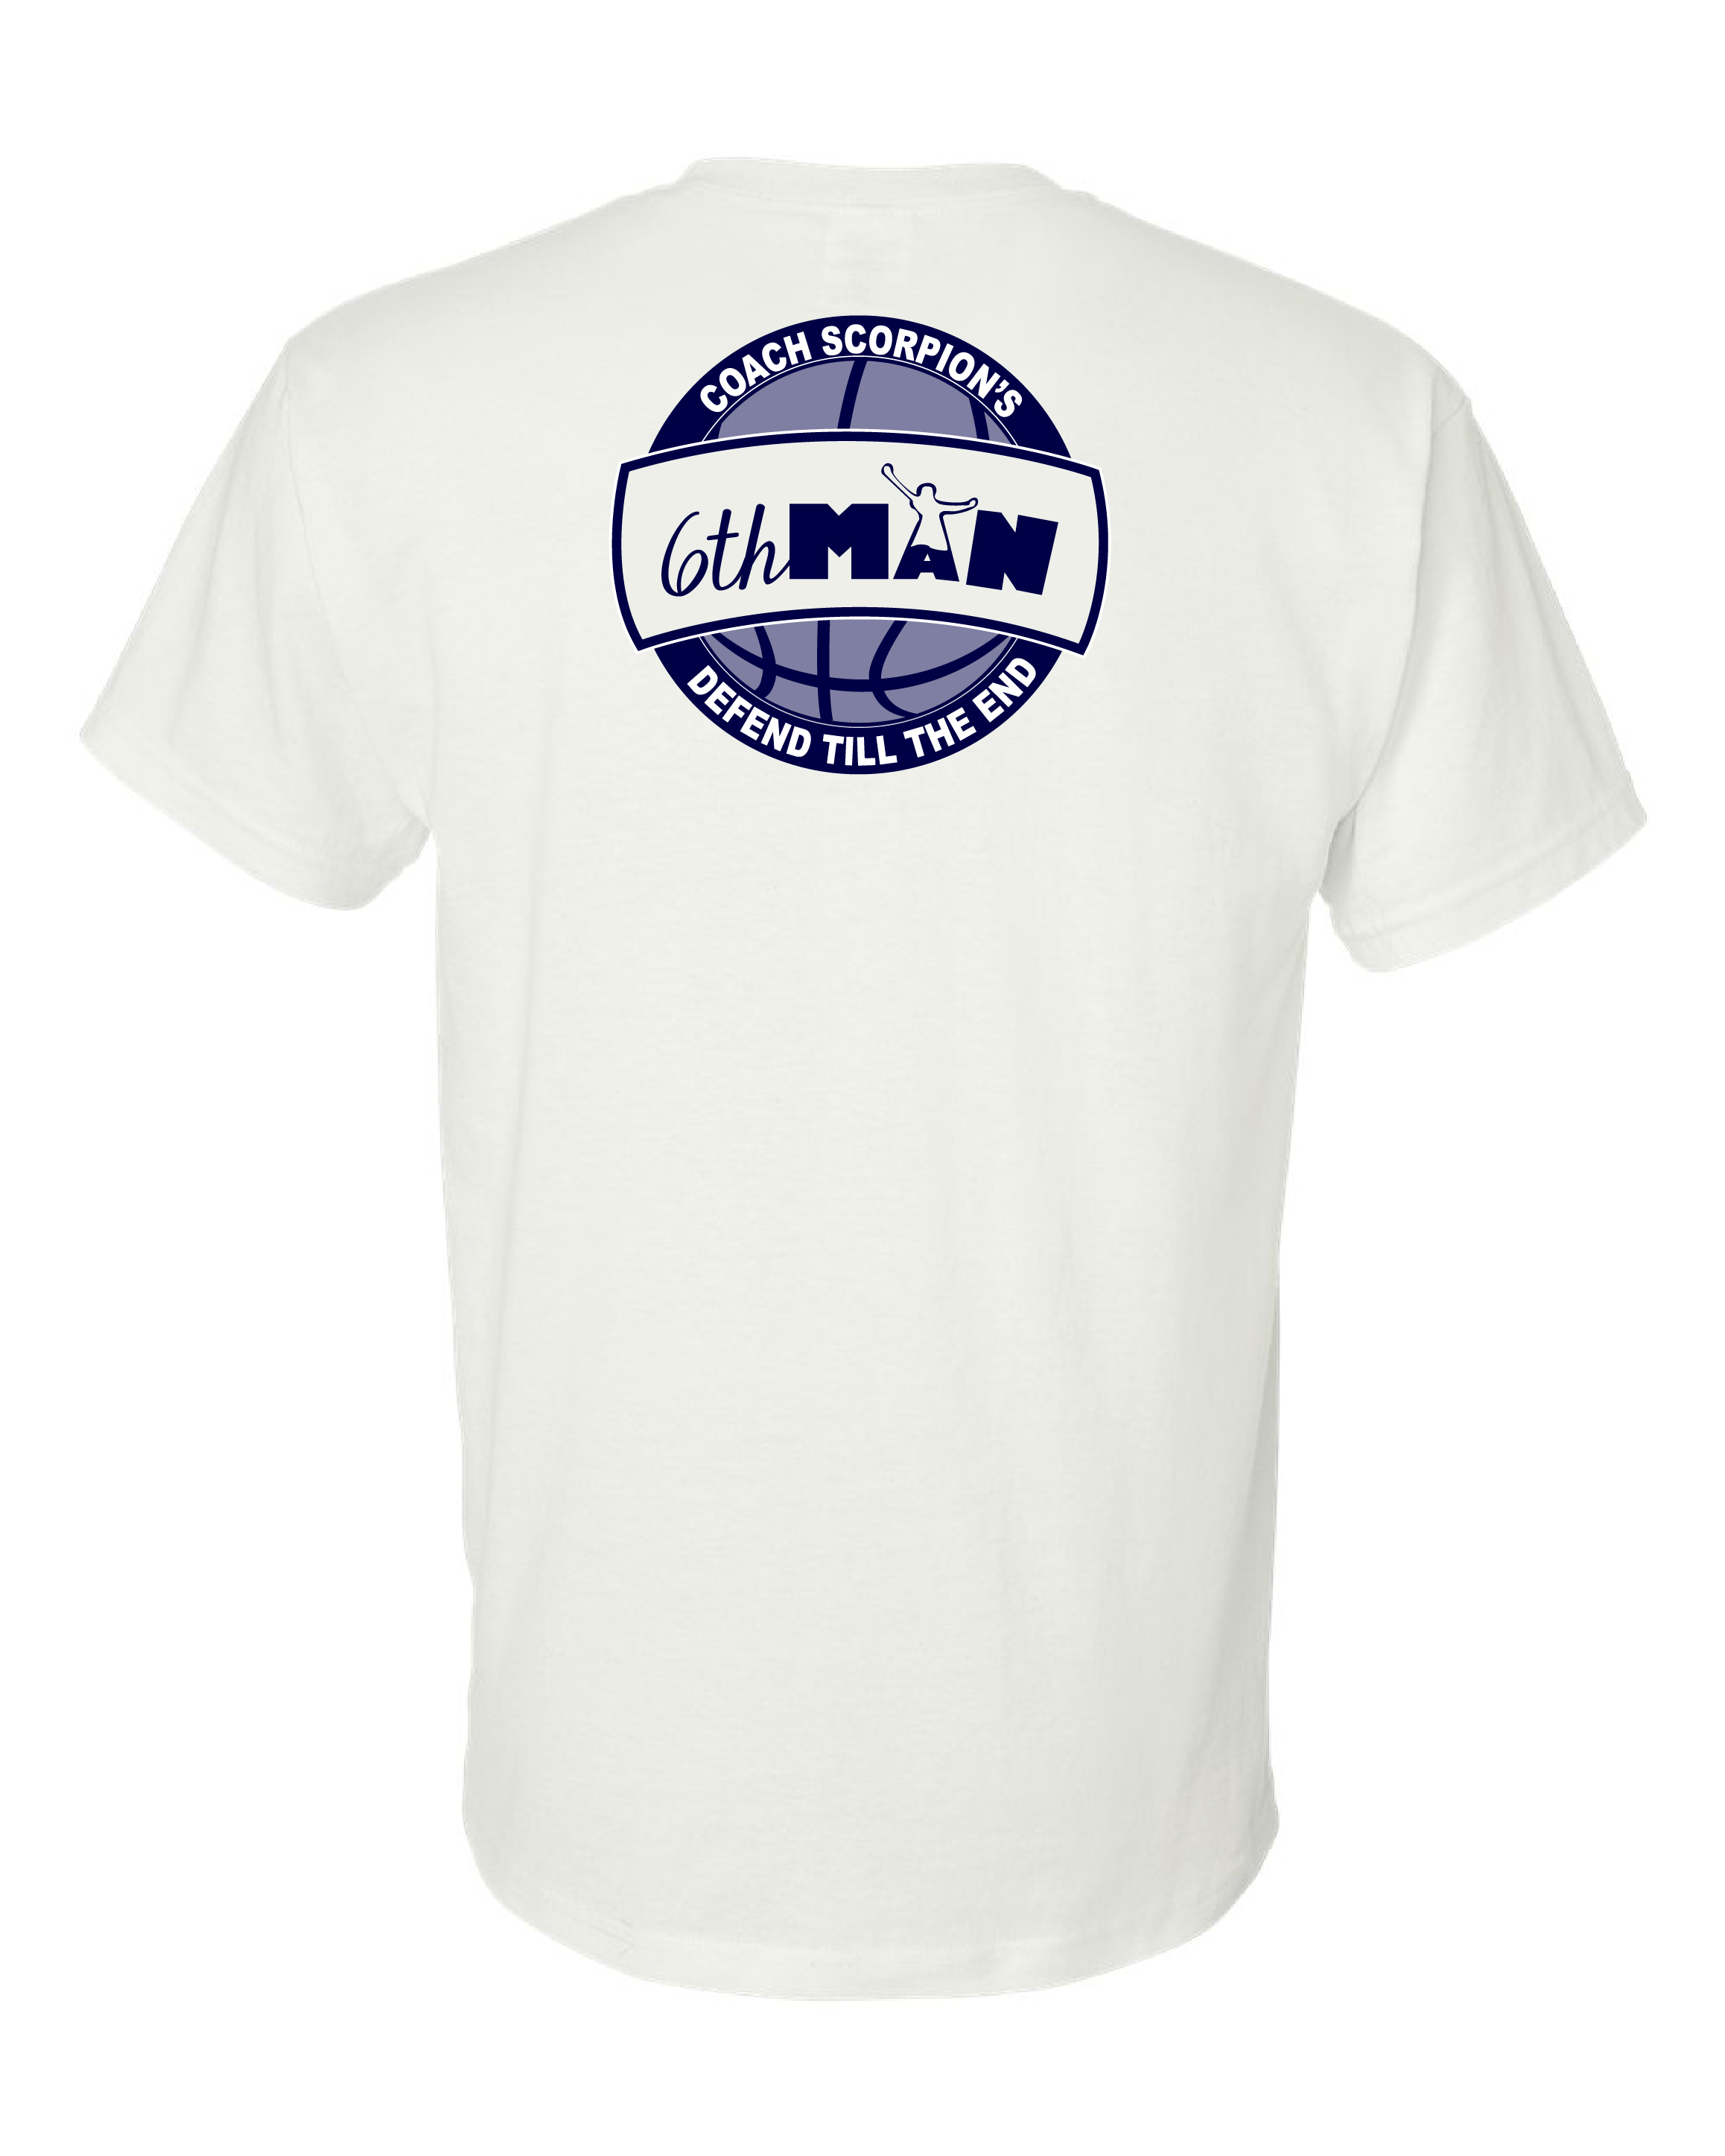 Gildan - DryBlend 50/50 T-Shirt - 6th Man